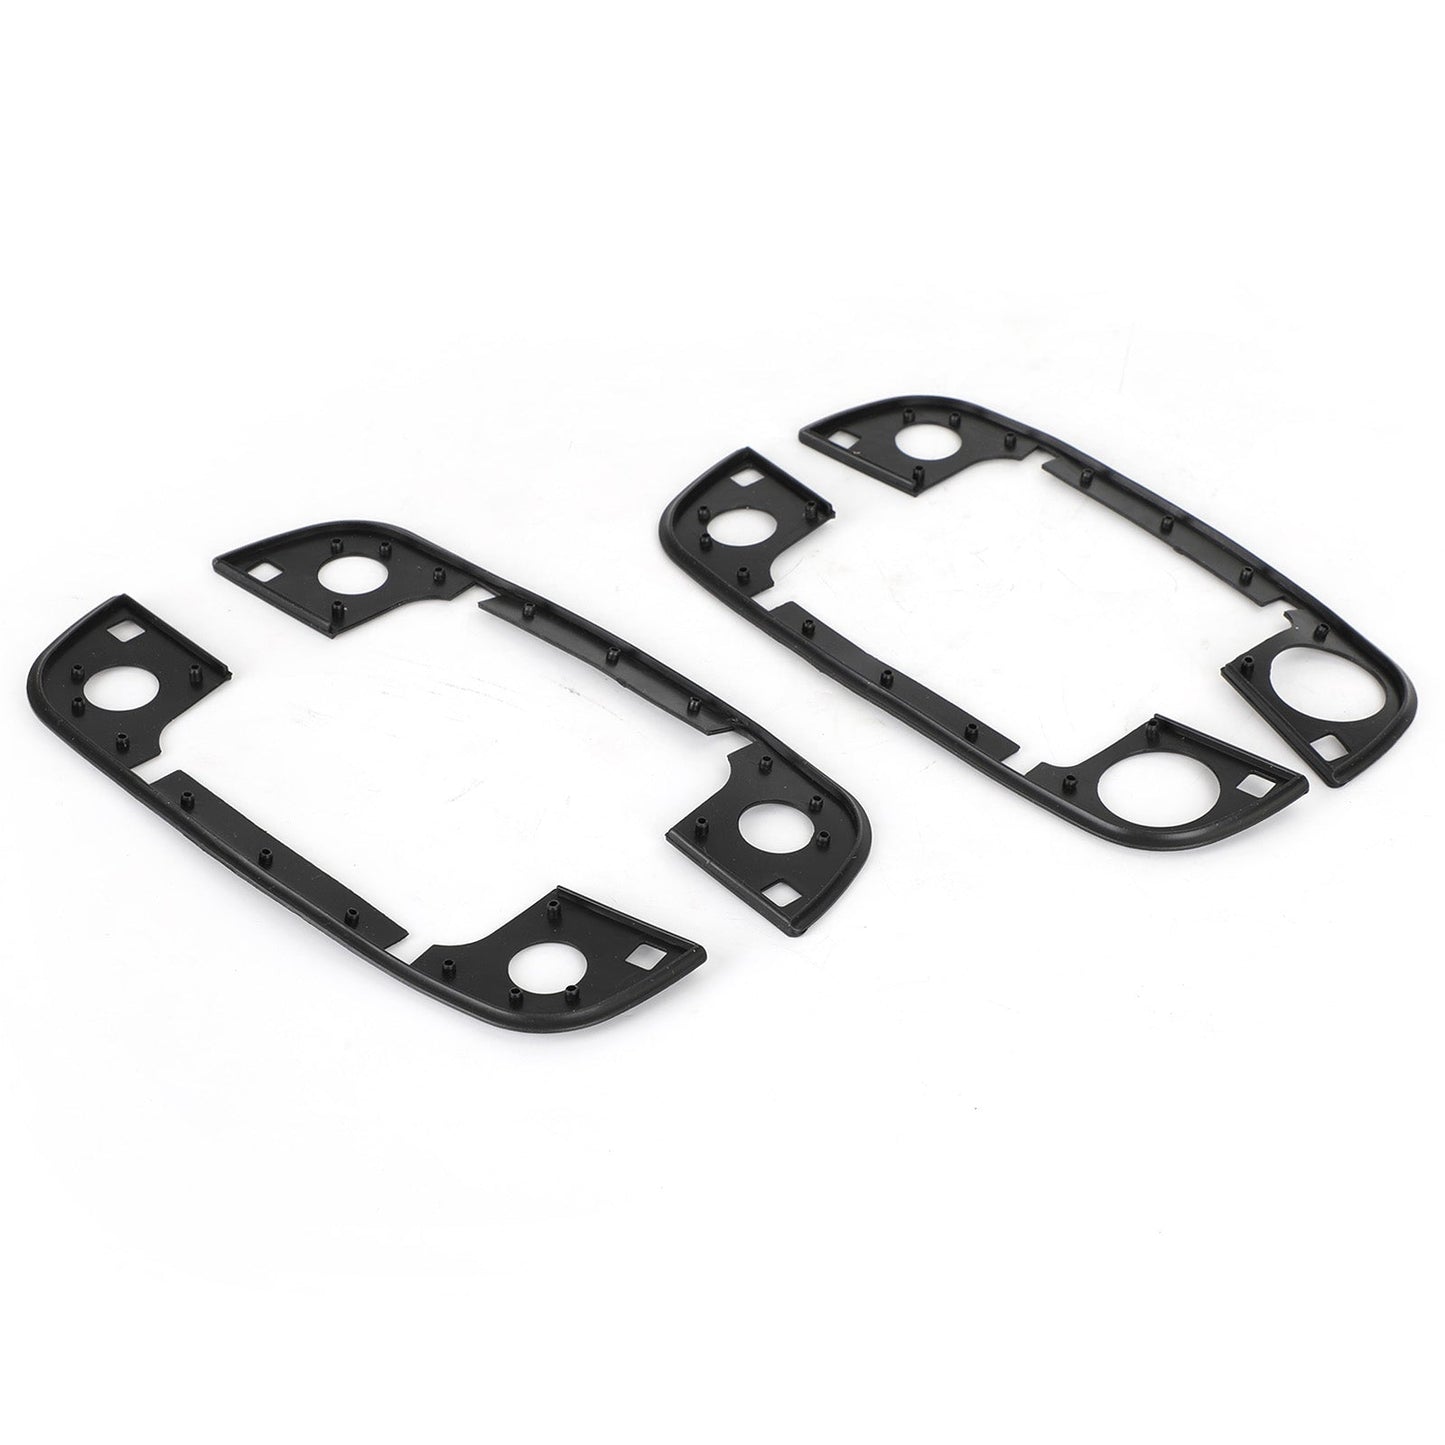 4x Door Handle Gasket Rubber Seals For BMW 3 5 7 Series E36 E34 E32